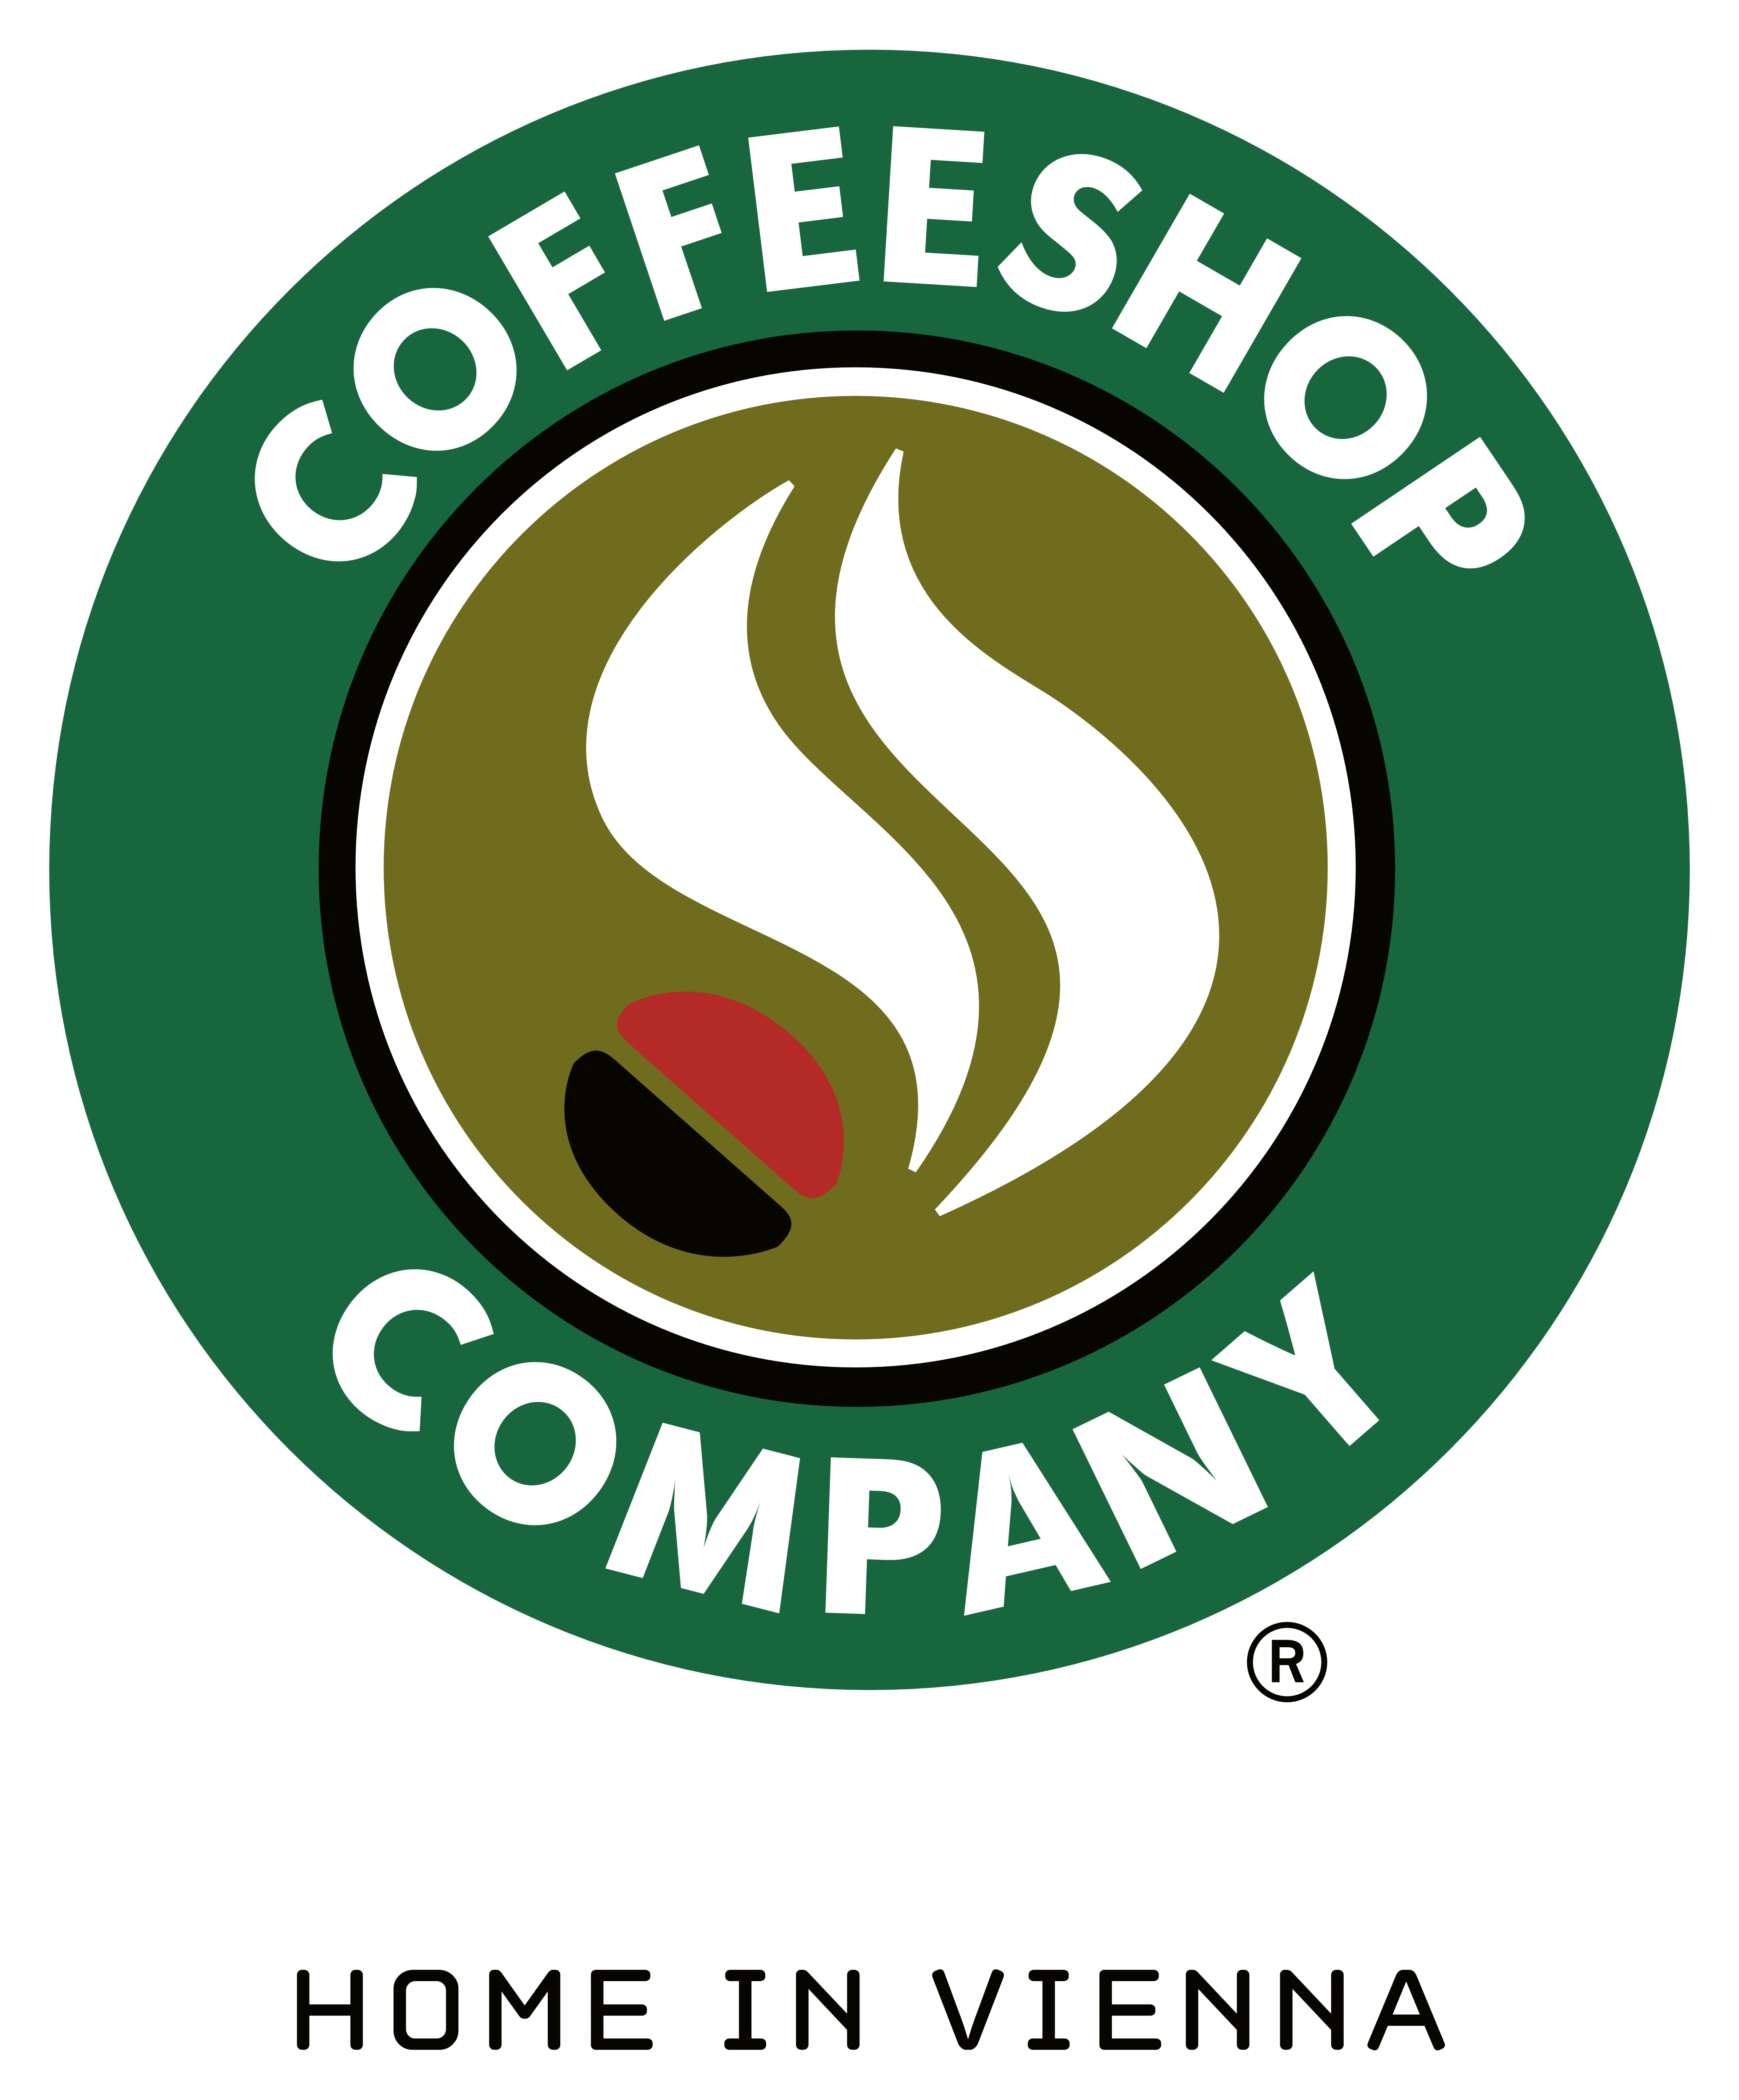 Coffee Shop Logo Png